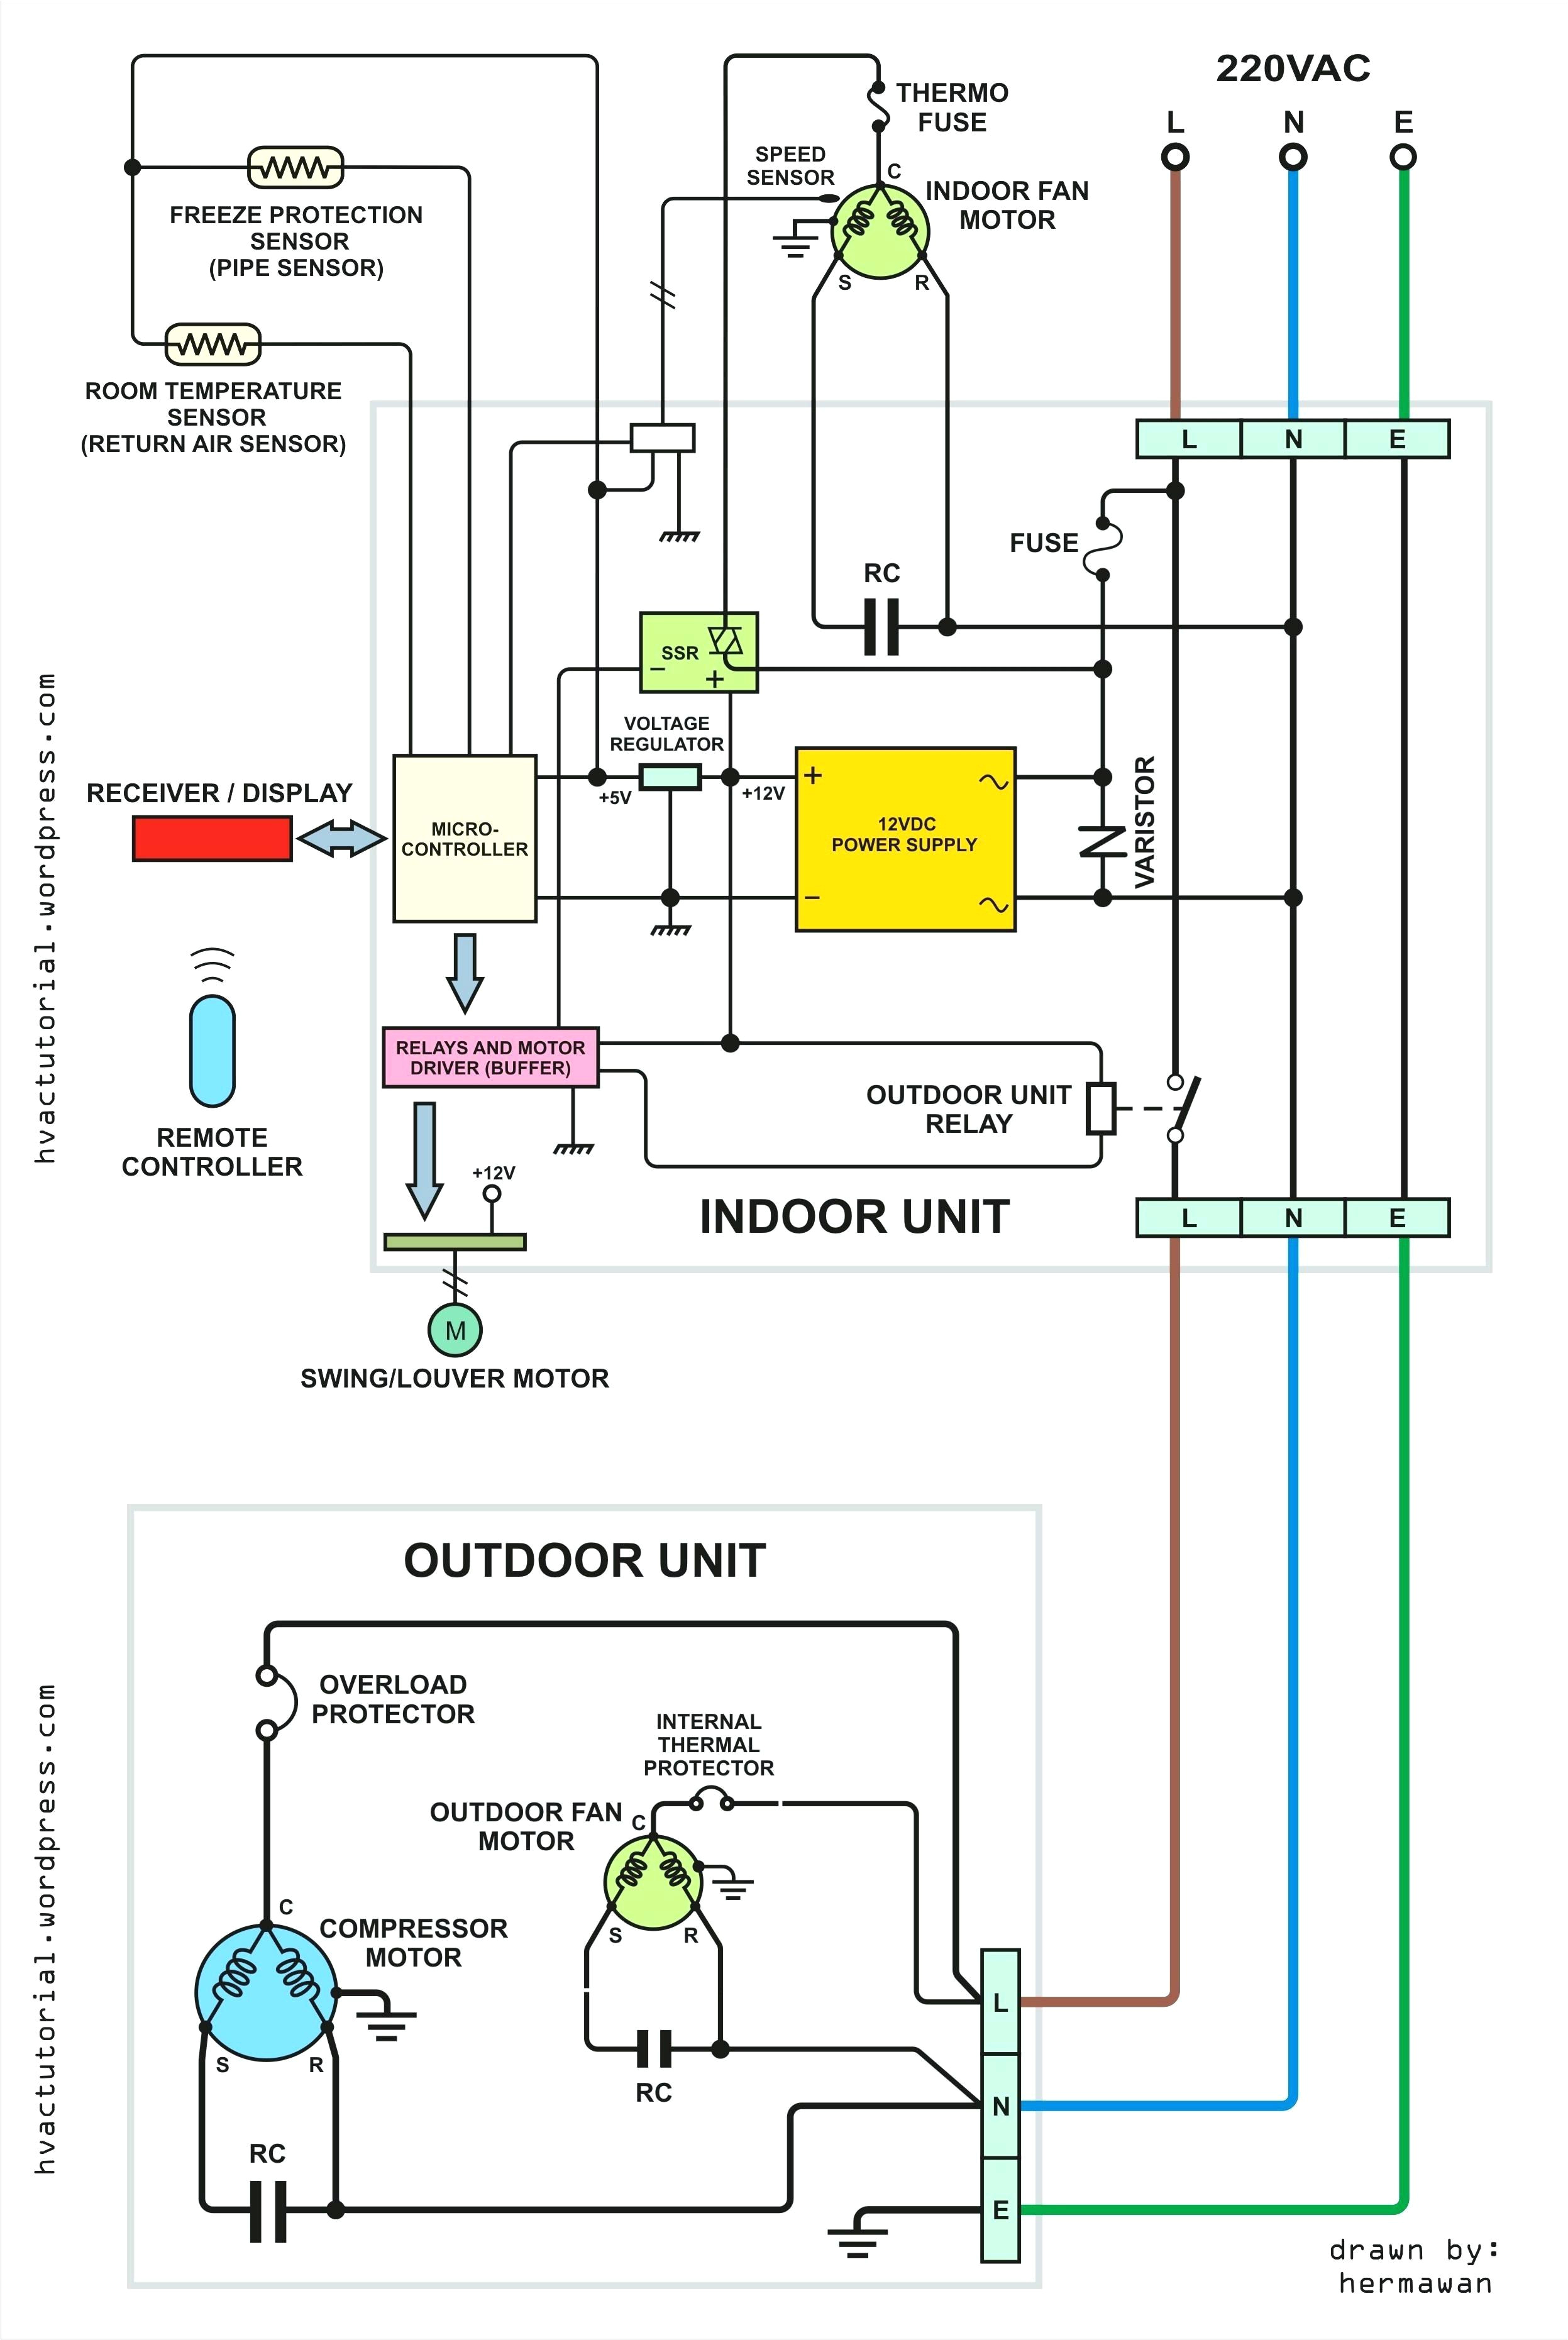 diagrams electrical motorcycles wiring wwheel4 wiring diagram expert diagram electrical wiring data diagram schematic diagrams electrical